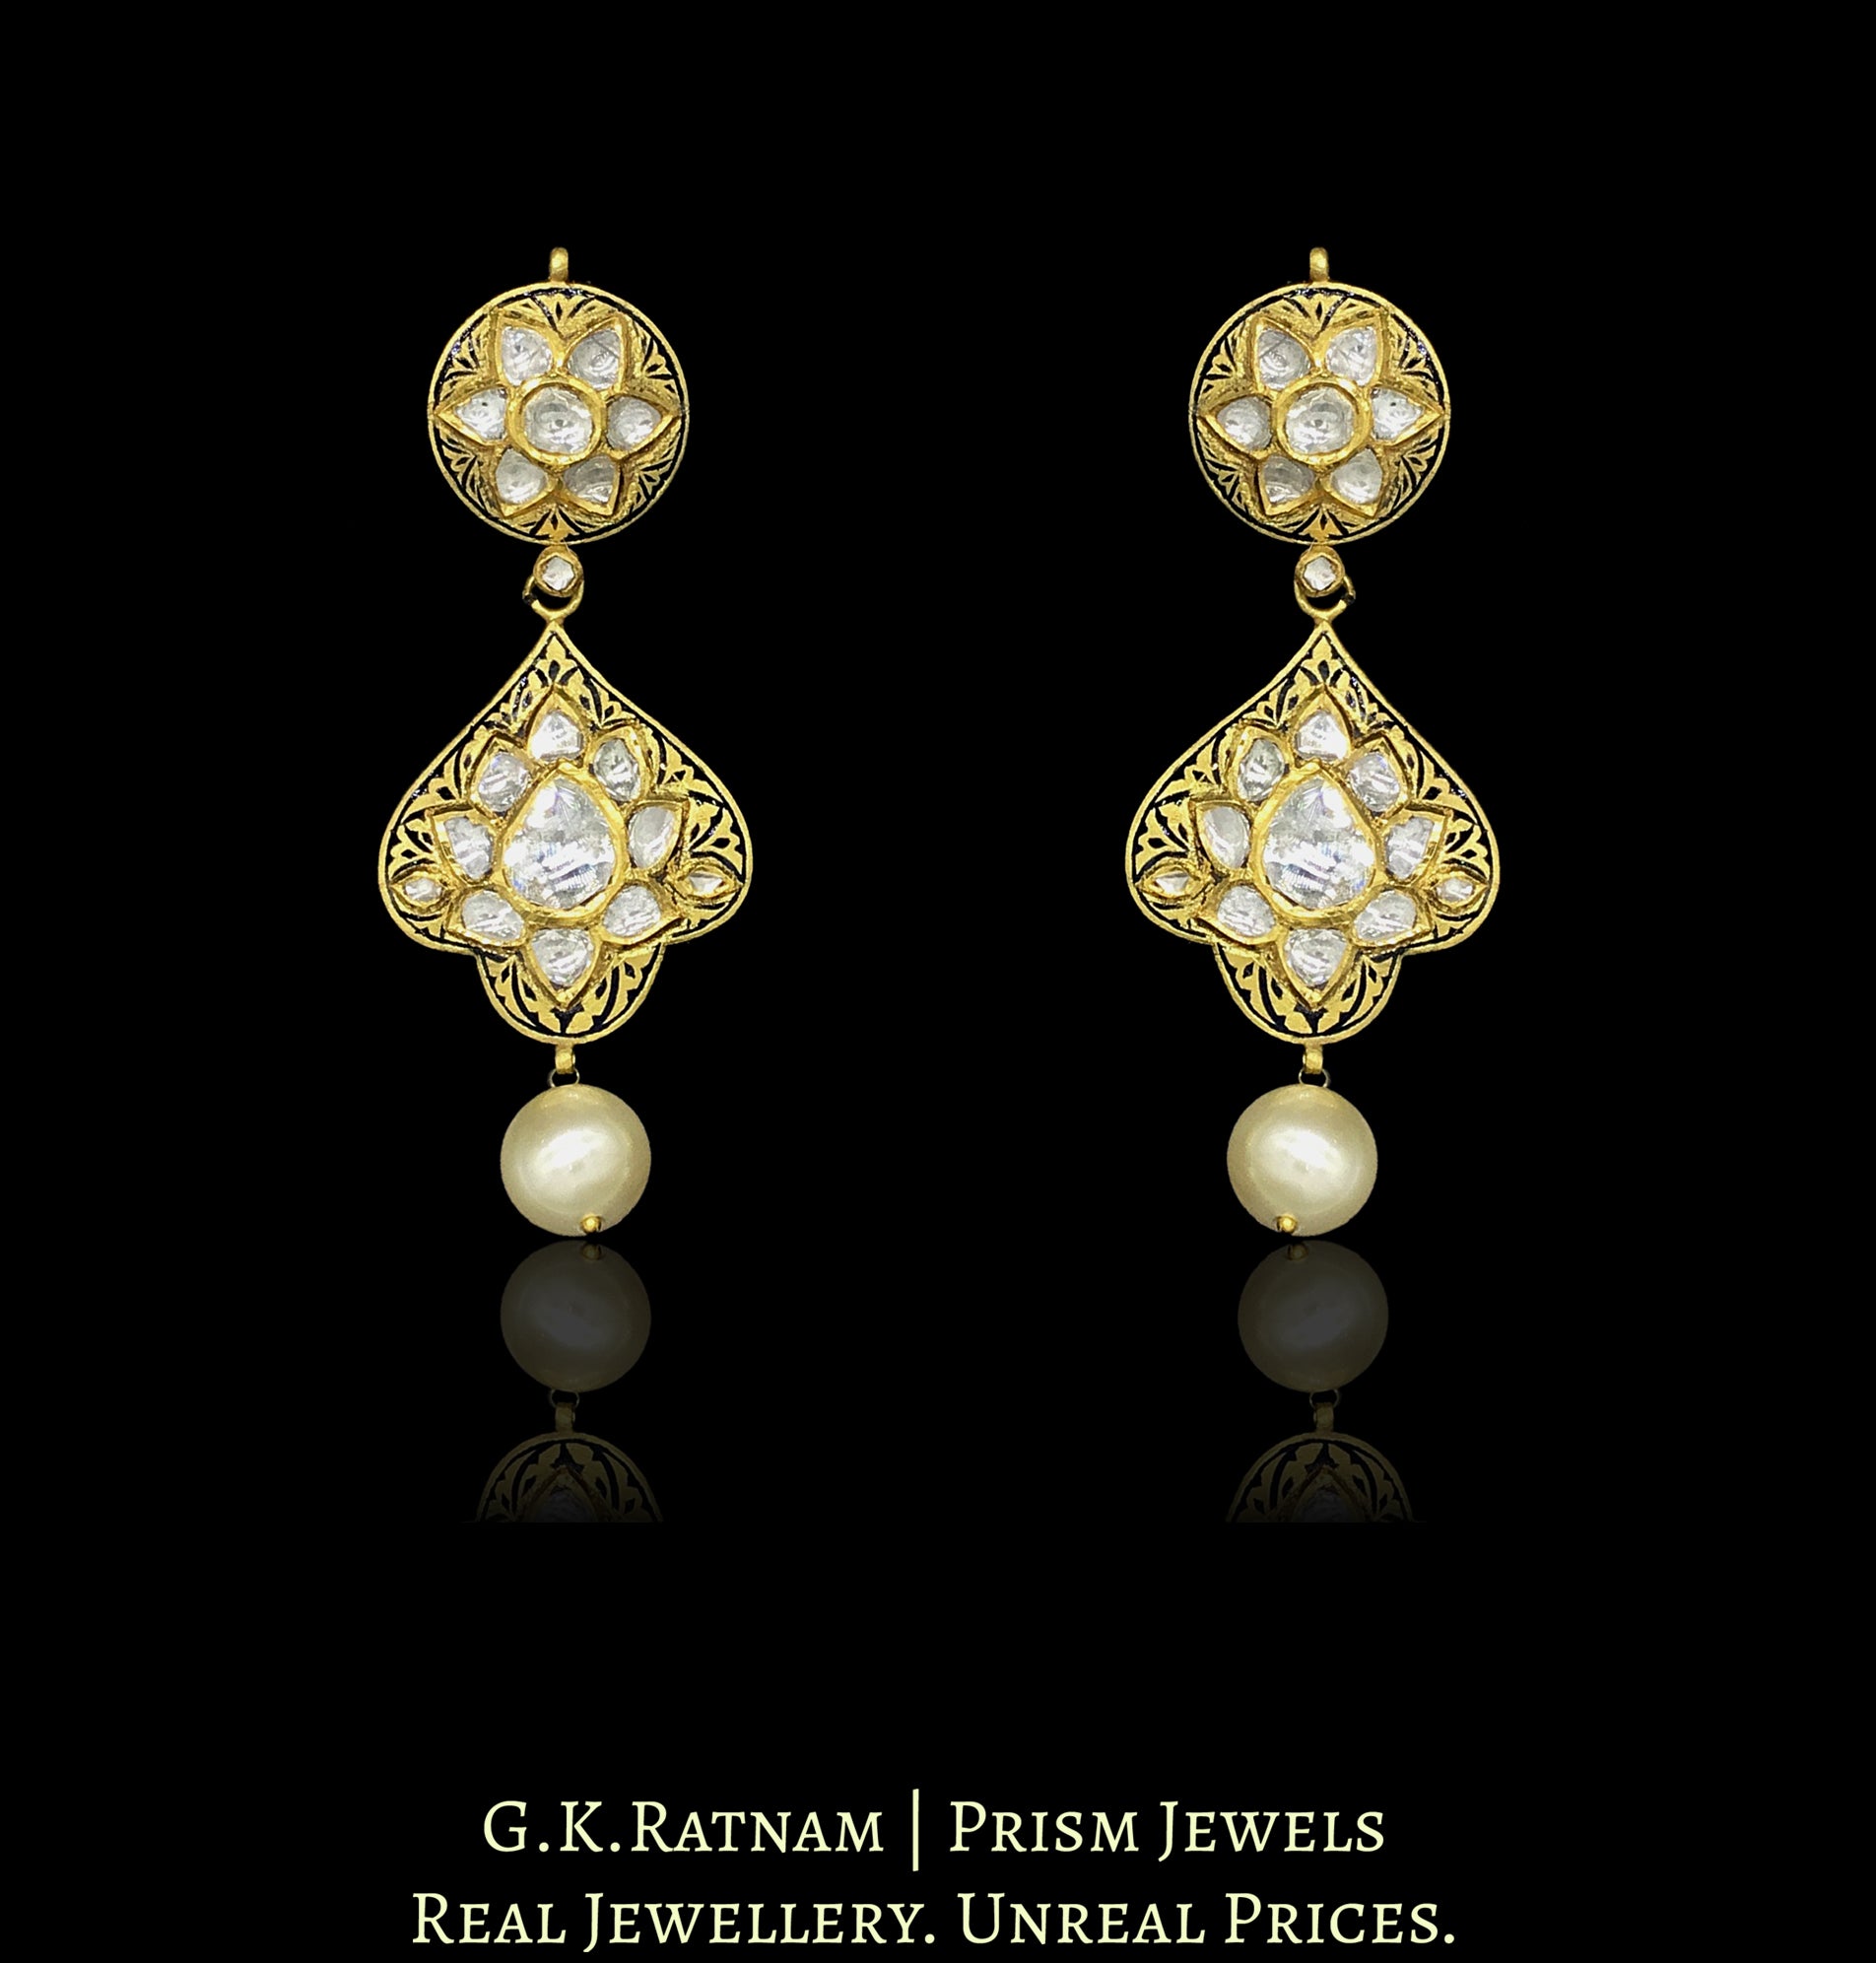 22k Gold and Diamond Polki Prataj Long Earring Pair - G. K. Ratnam